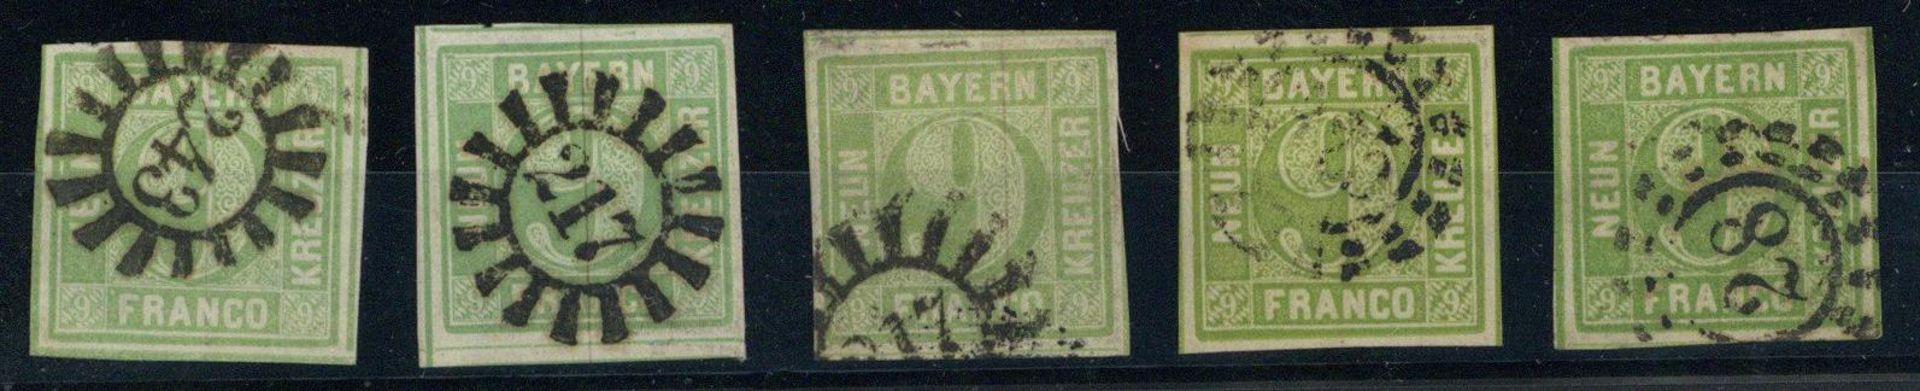 BAYERN, Mi.Nr.5a-d,aa, 1850/62, 9 Kr grün, alle 5 Farben, je vollrandig, mit gMR bzw oMR, Farbe a